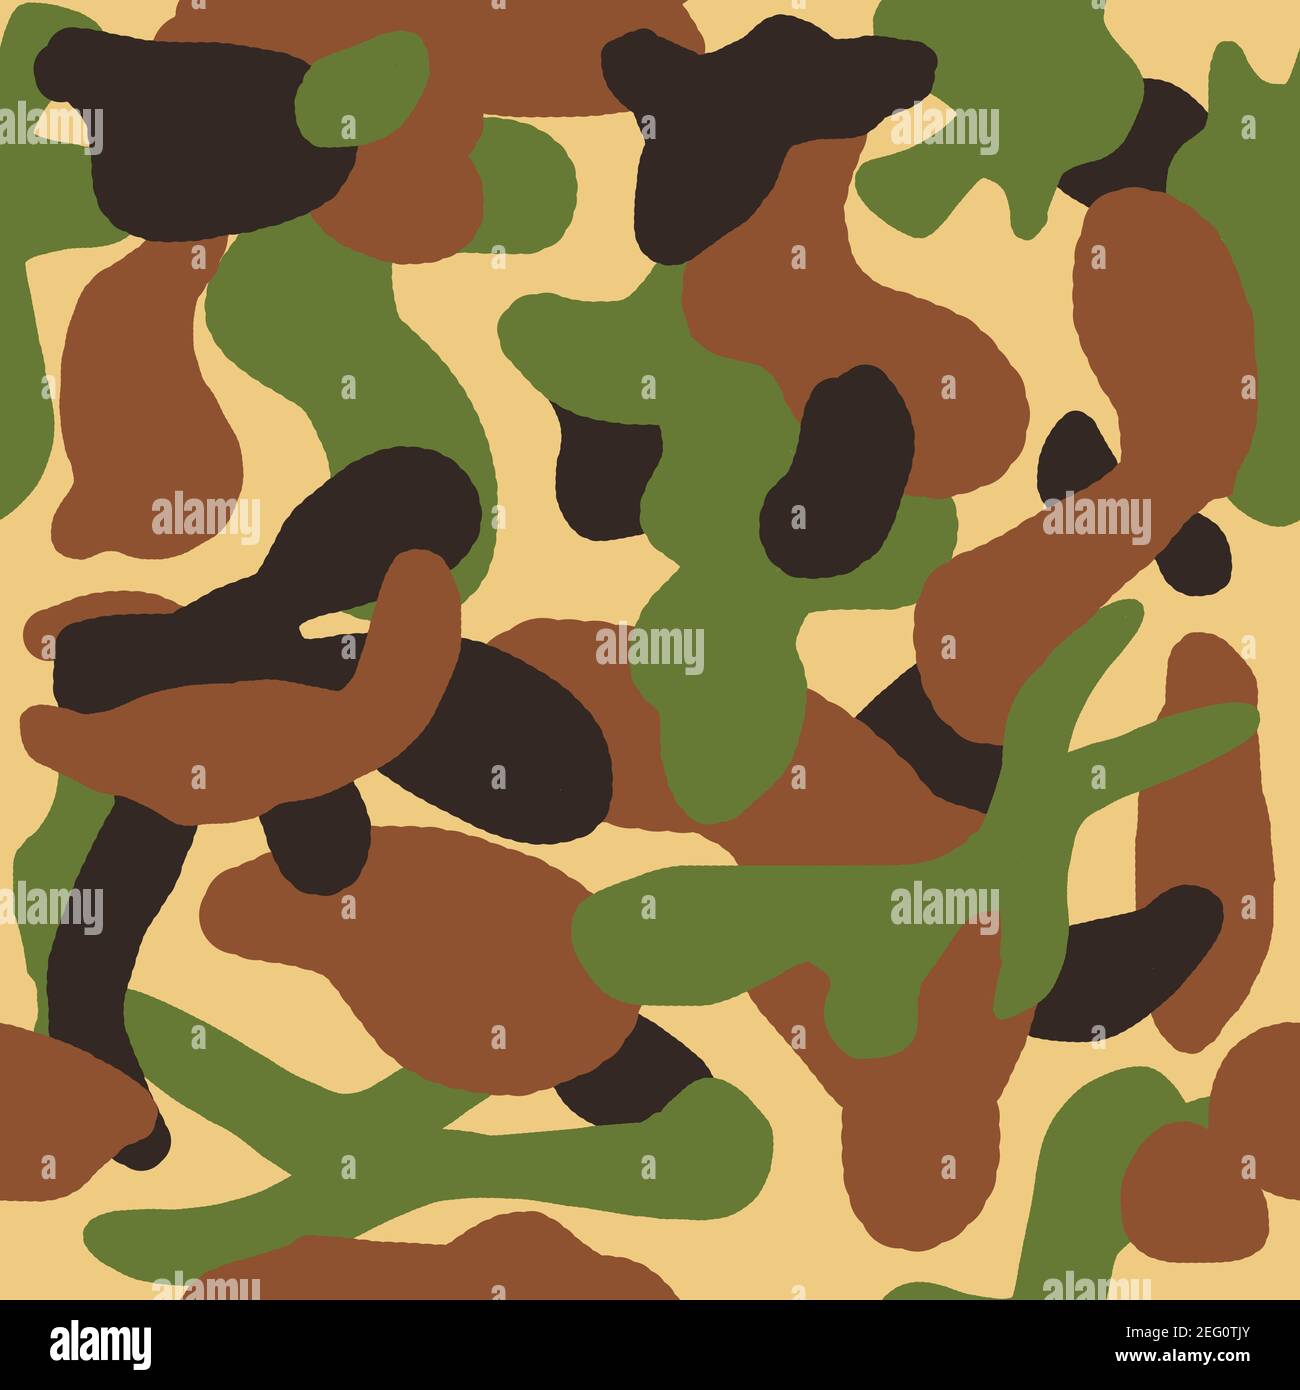 Green khaki camouflage camo seamless pattern Military army design